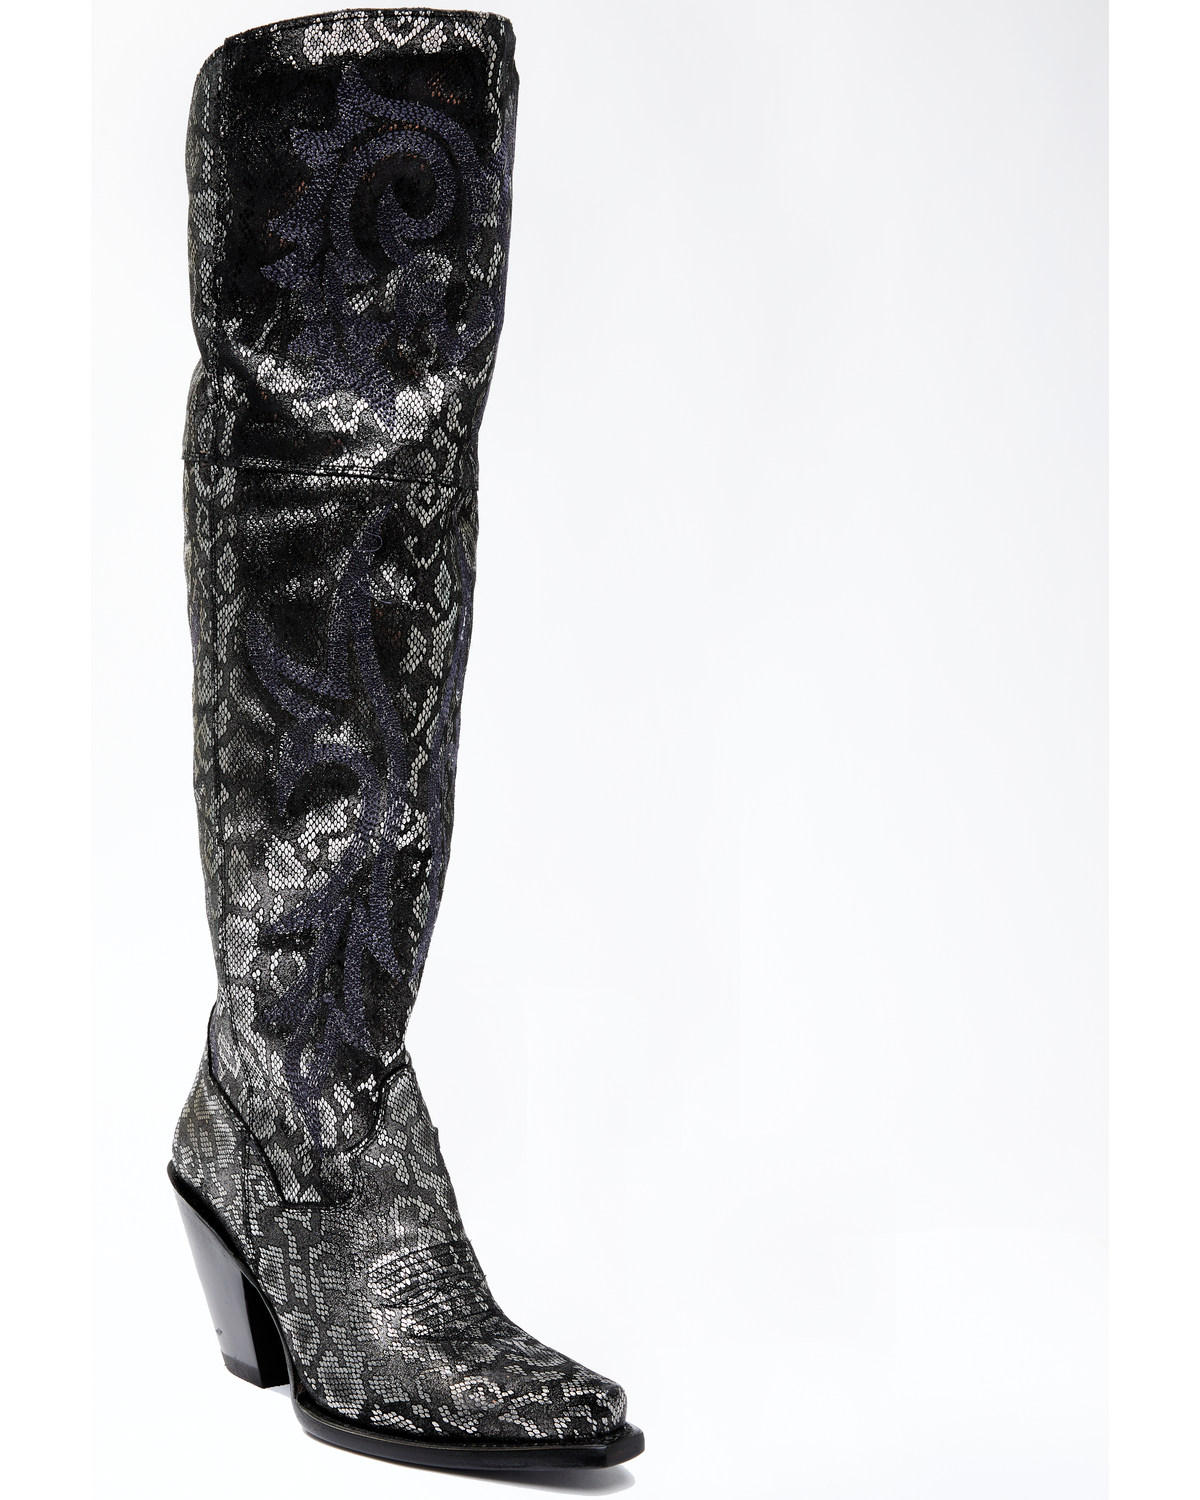 Dan Post Women's Black Snake Print Western Boots - Snip Toe